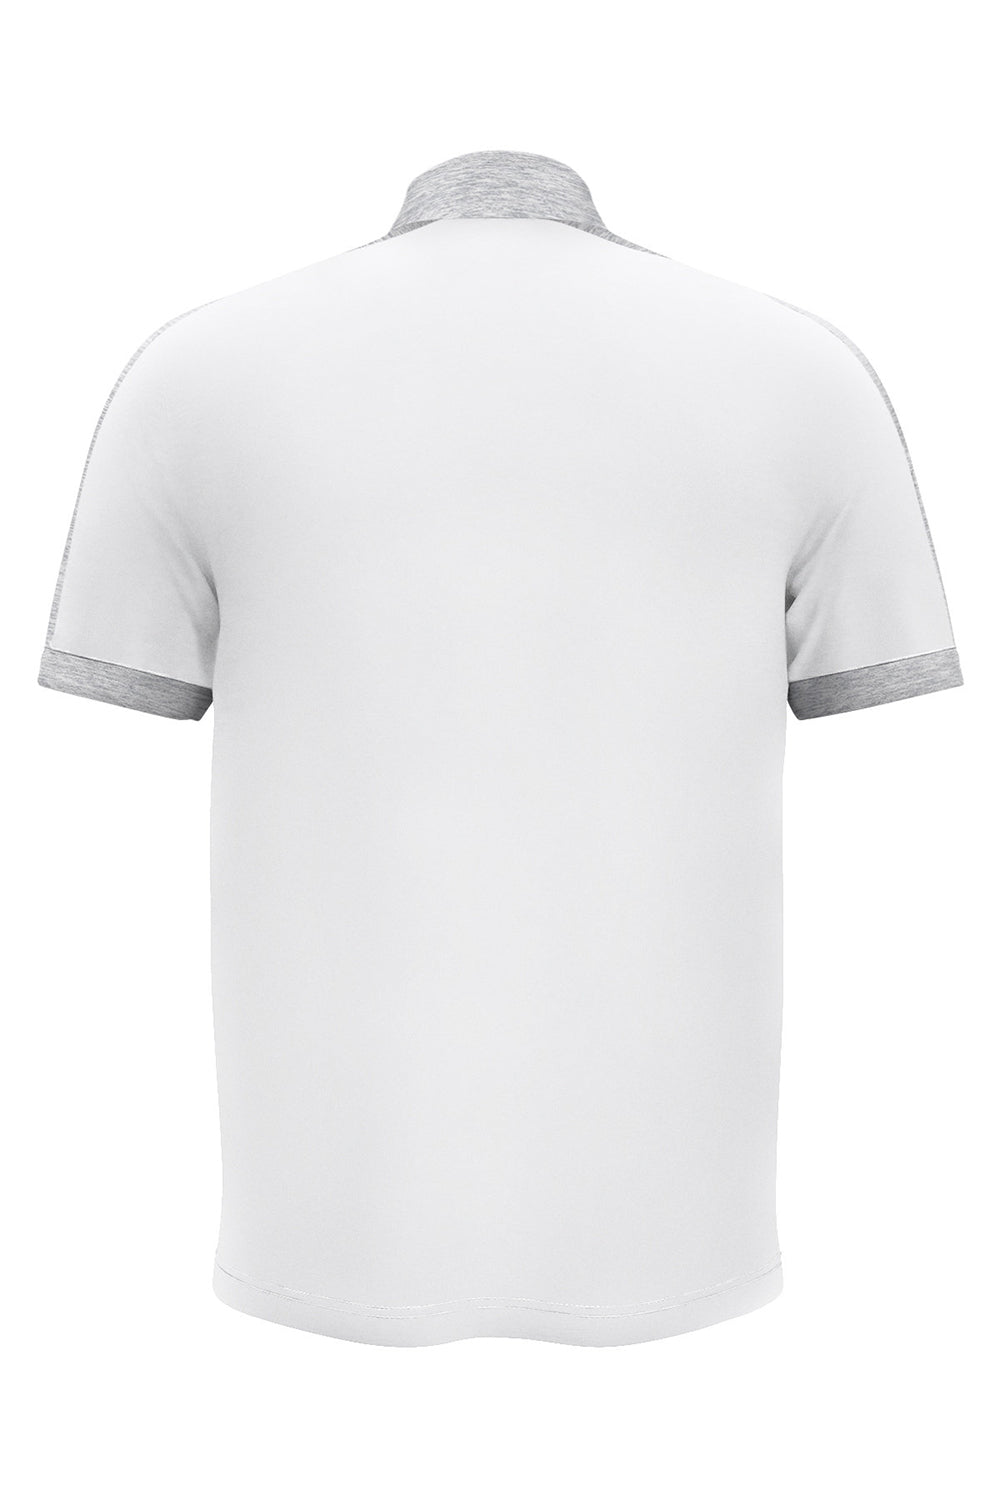 Under Armour 1376907 Mens Trophy Level Moisture Wicking Short Sleeve Polo Shirt White/Mod Grey Flat Back